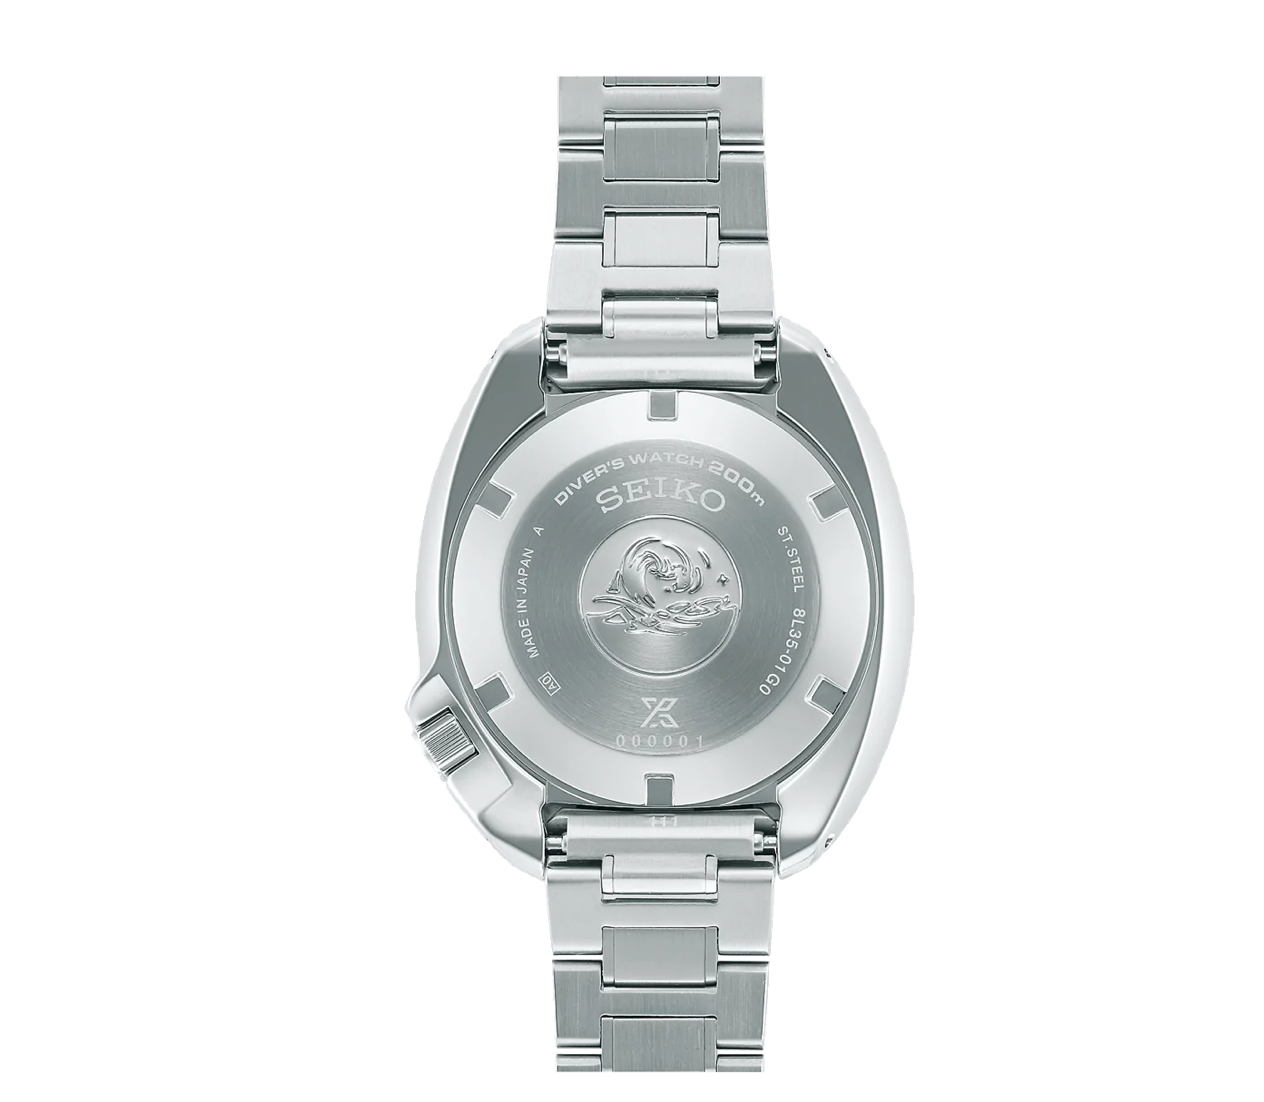 Seiko Automatic Prospex Dive Watch-SLA051J1